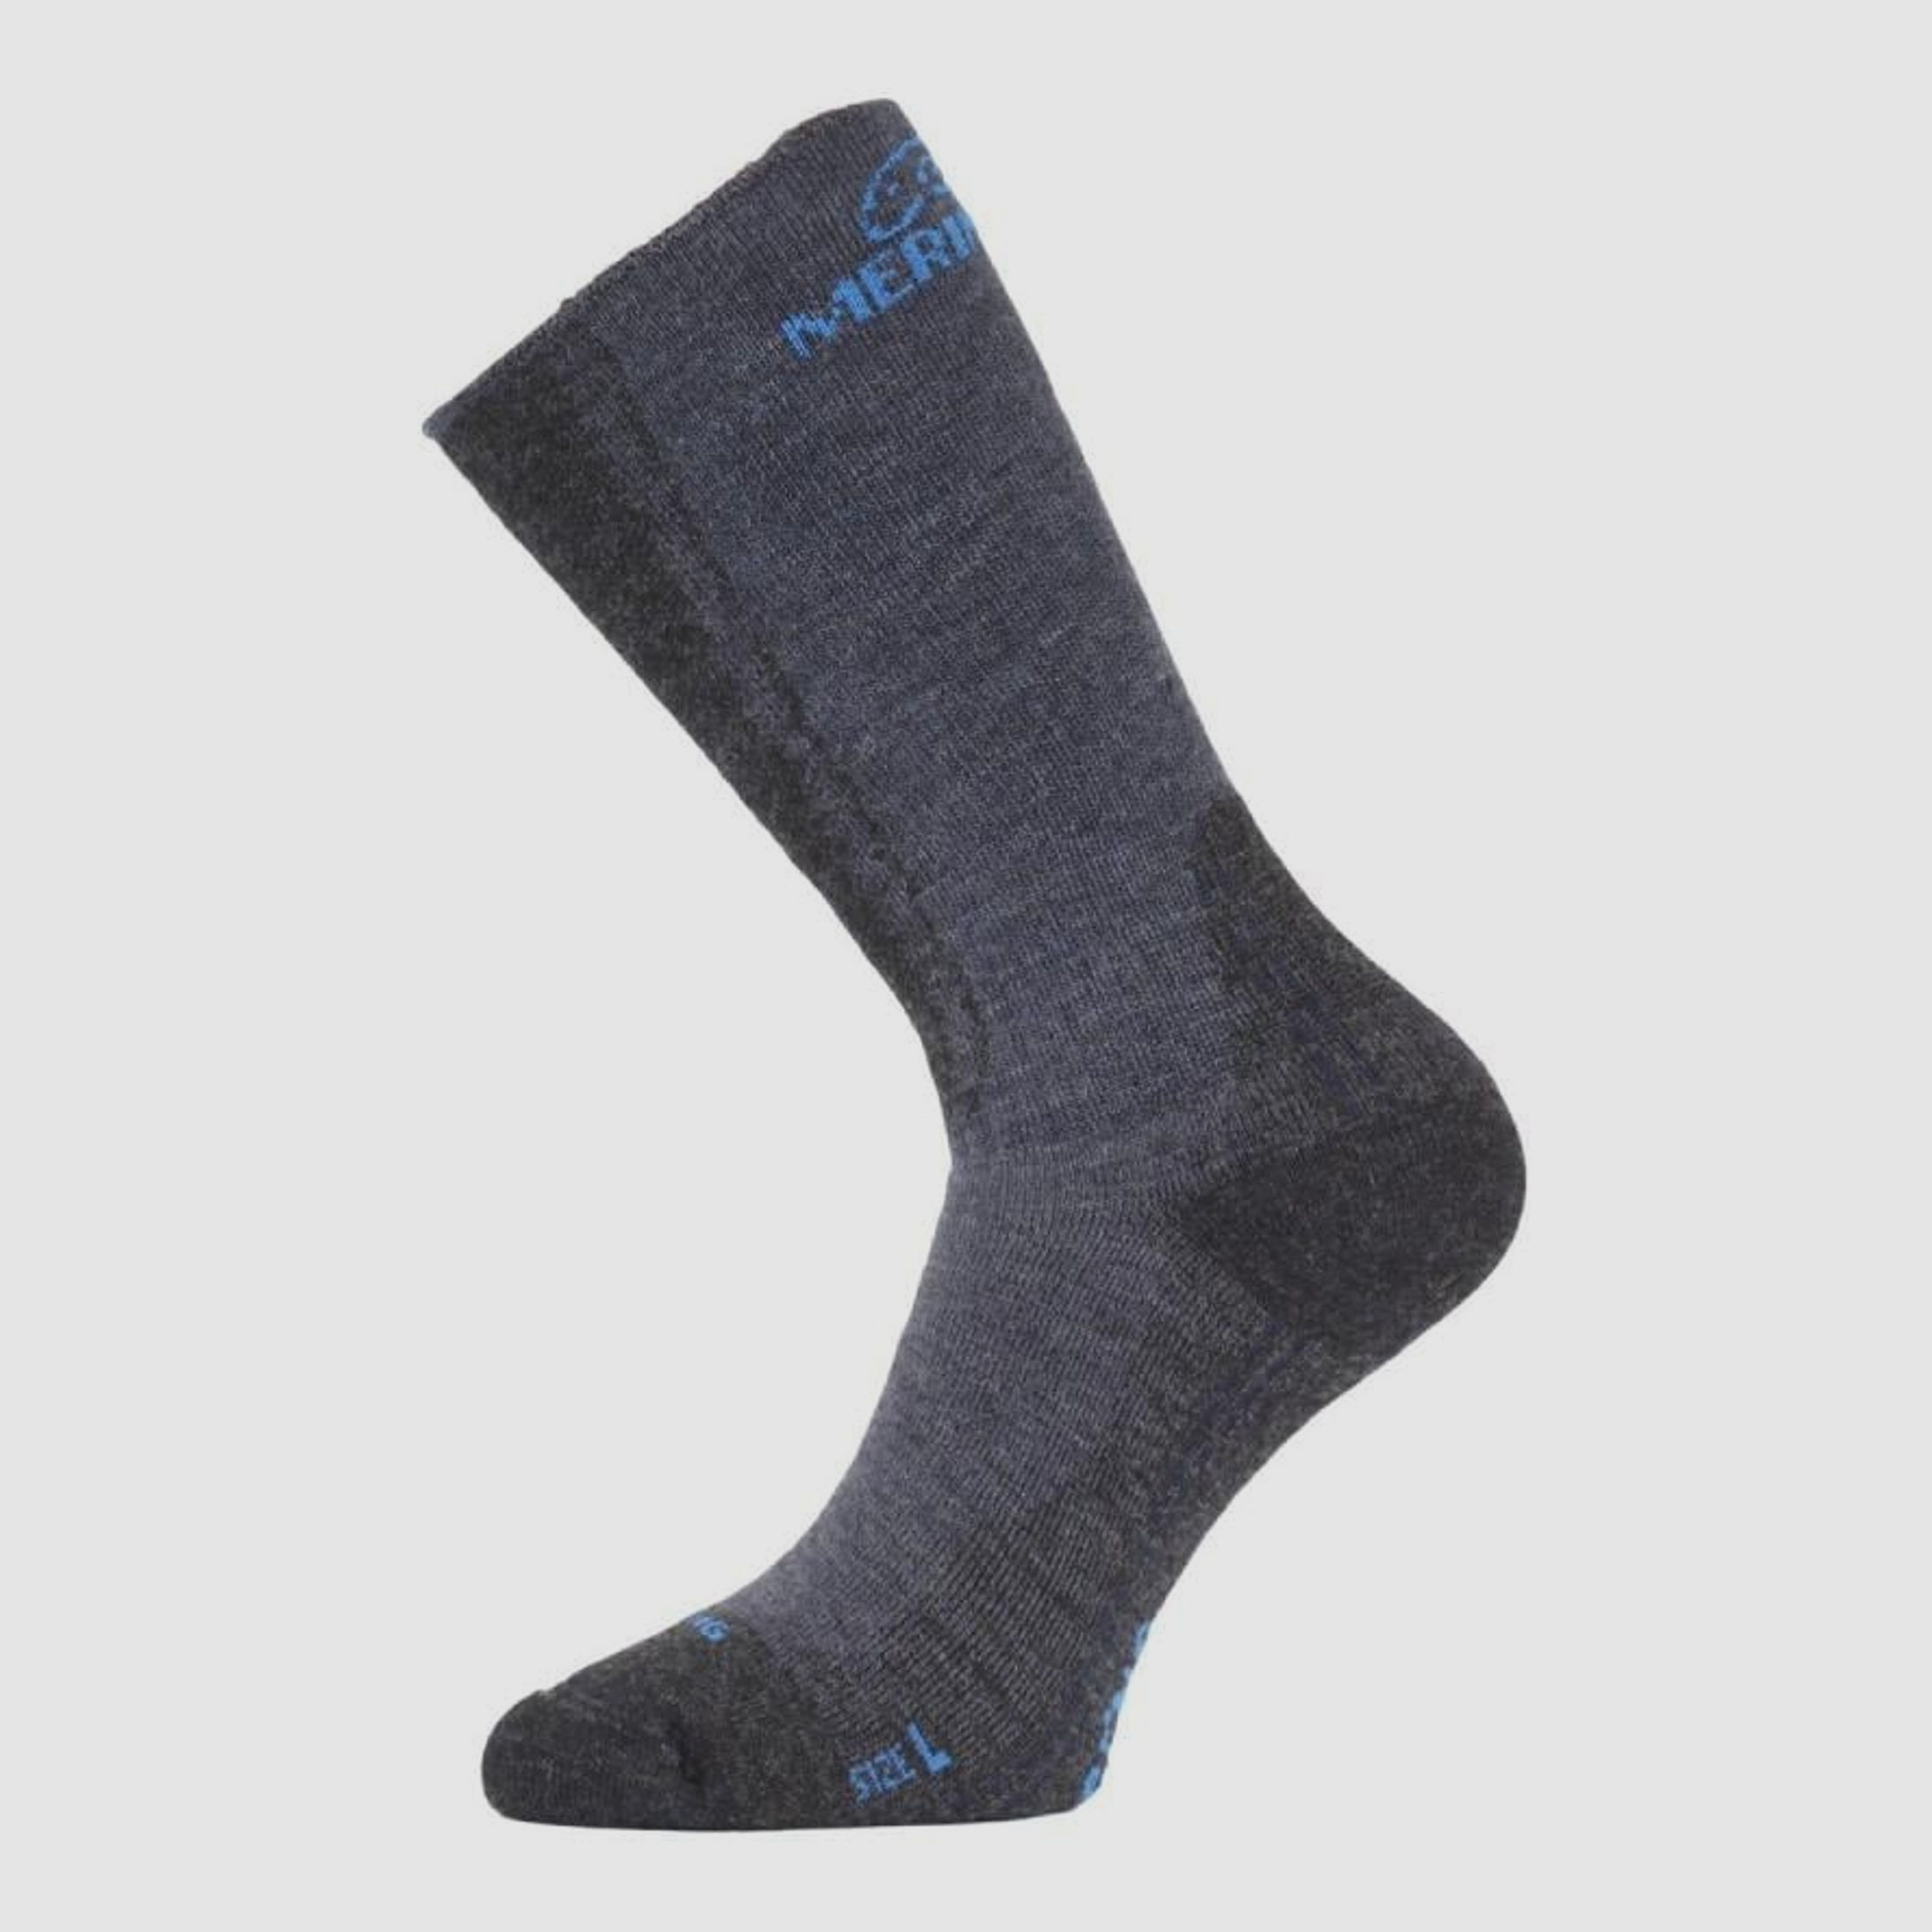 Lasting Warme Merino WSM Trekking-Socken Blau    S (EU 34-37)